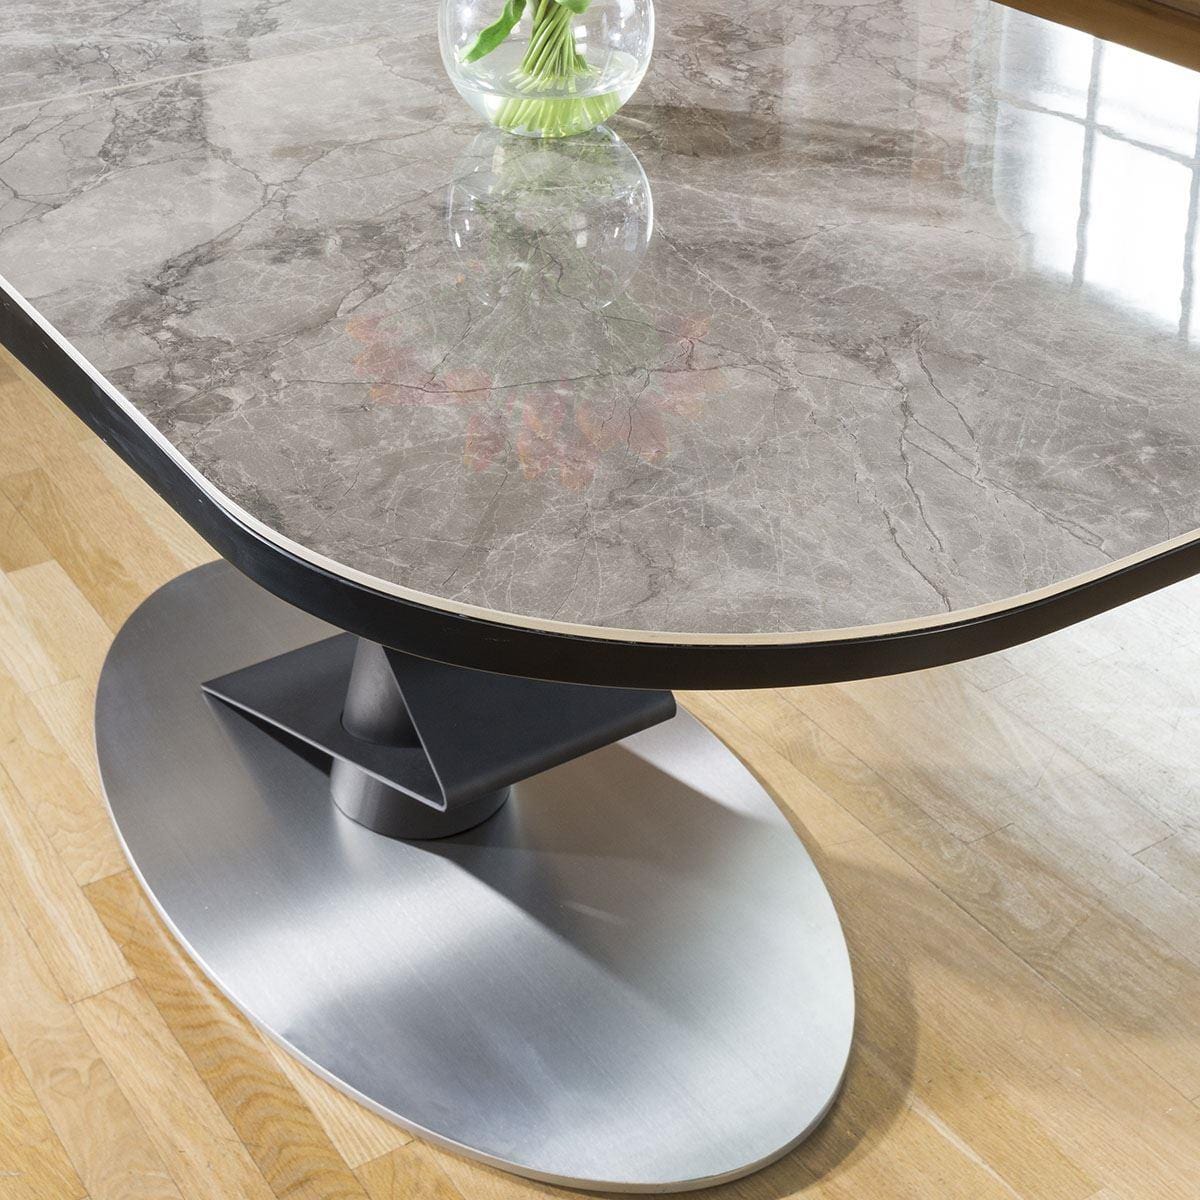 Quatropi Grey Ceramic Extending Table & Grey Swivel Chairs - 6 Seater Dining Set